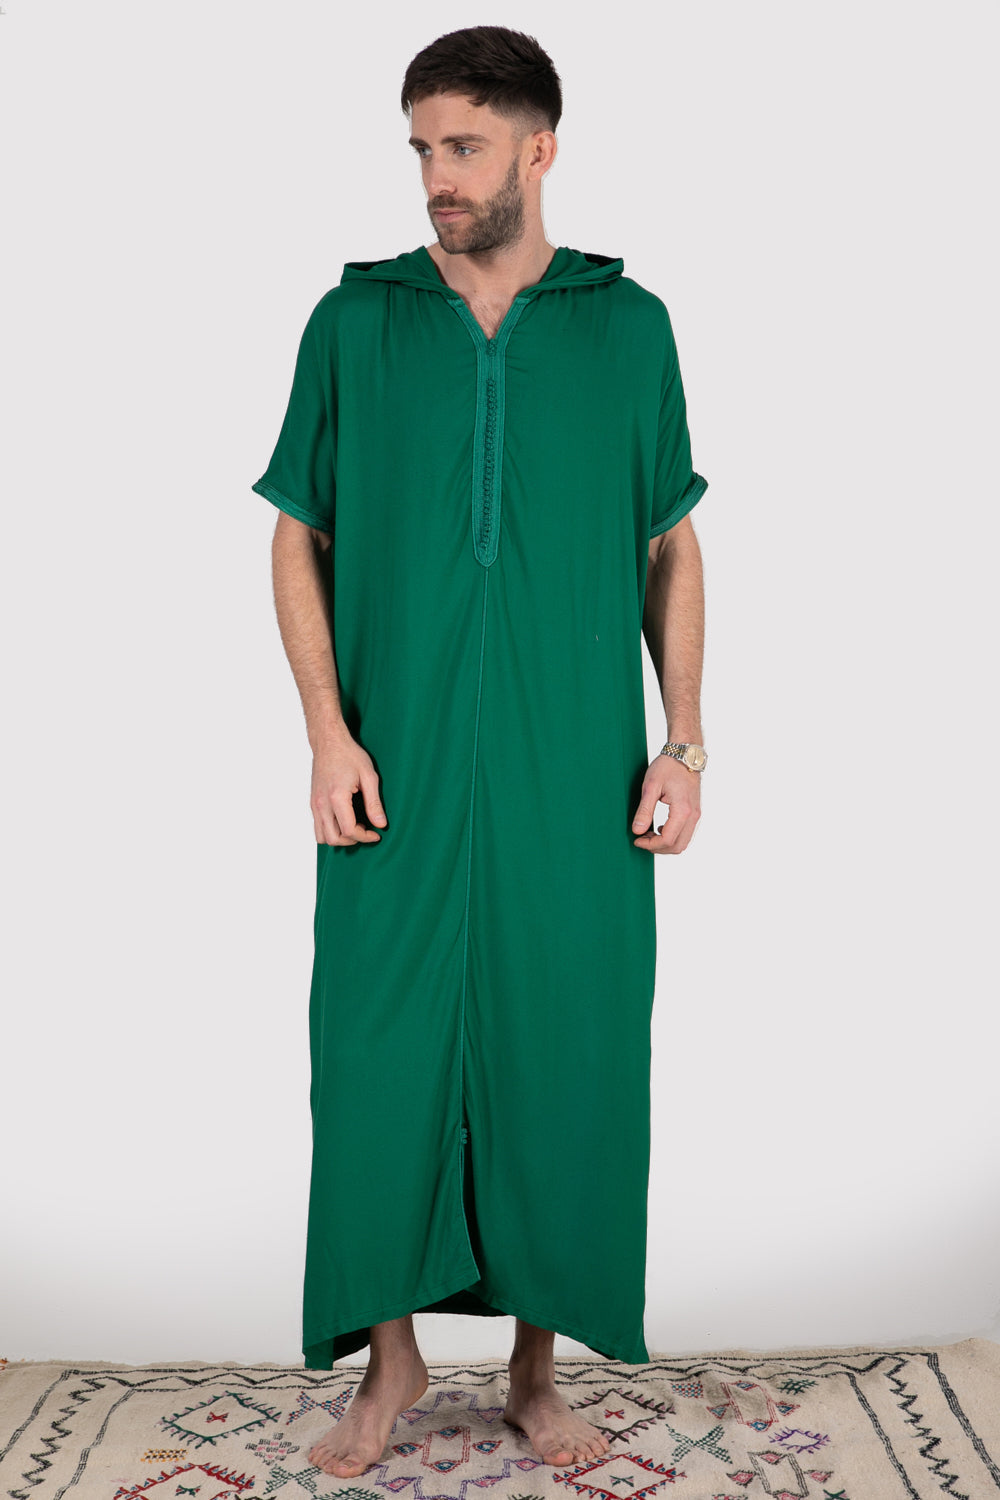 Gandoura Vanity Men's Hooded Robe Casual Short Sleeve Thobe in Green